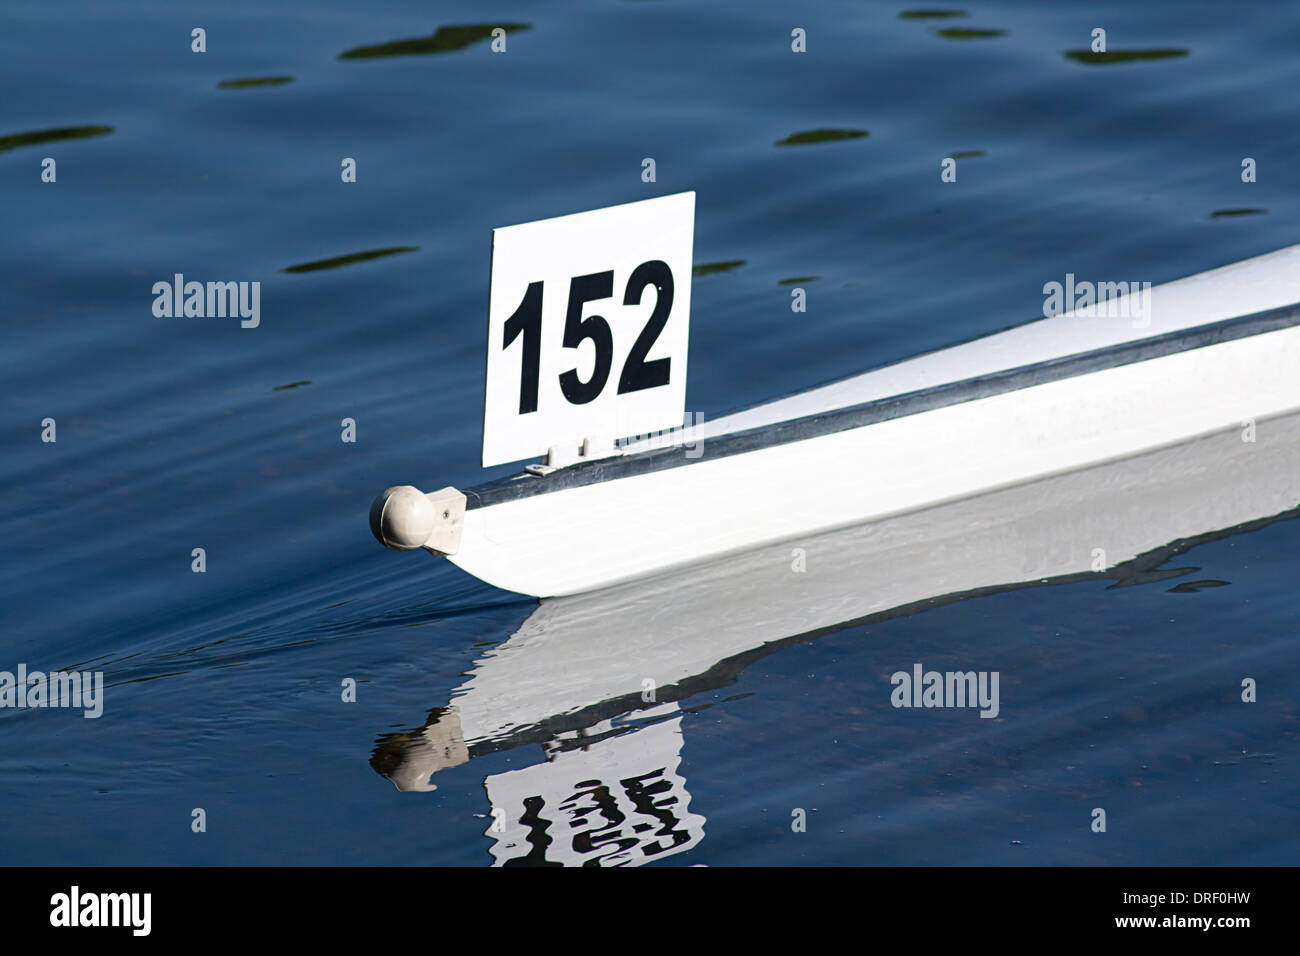 Racing shell in barca per competere in una competitiva gara a remi Foto Stock